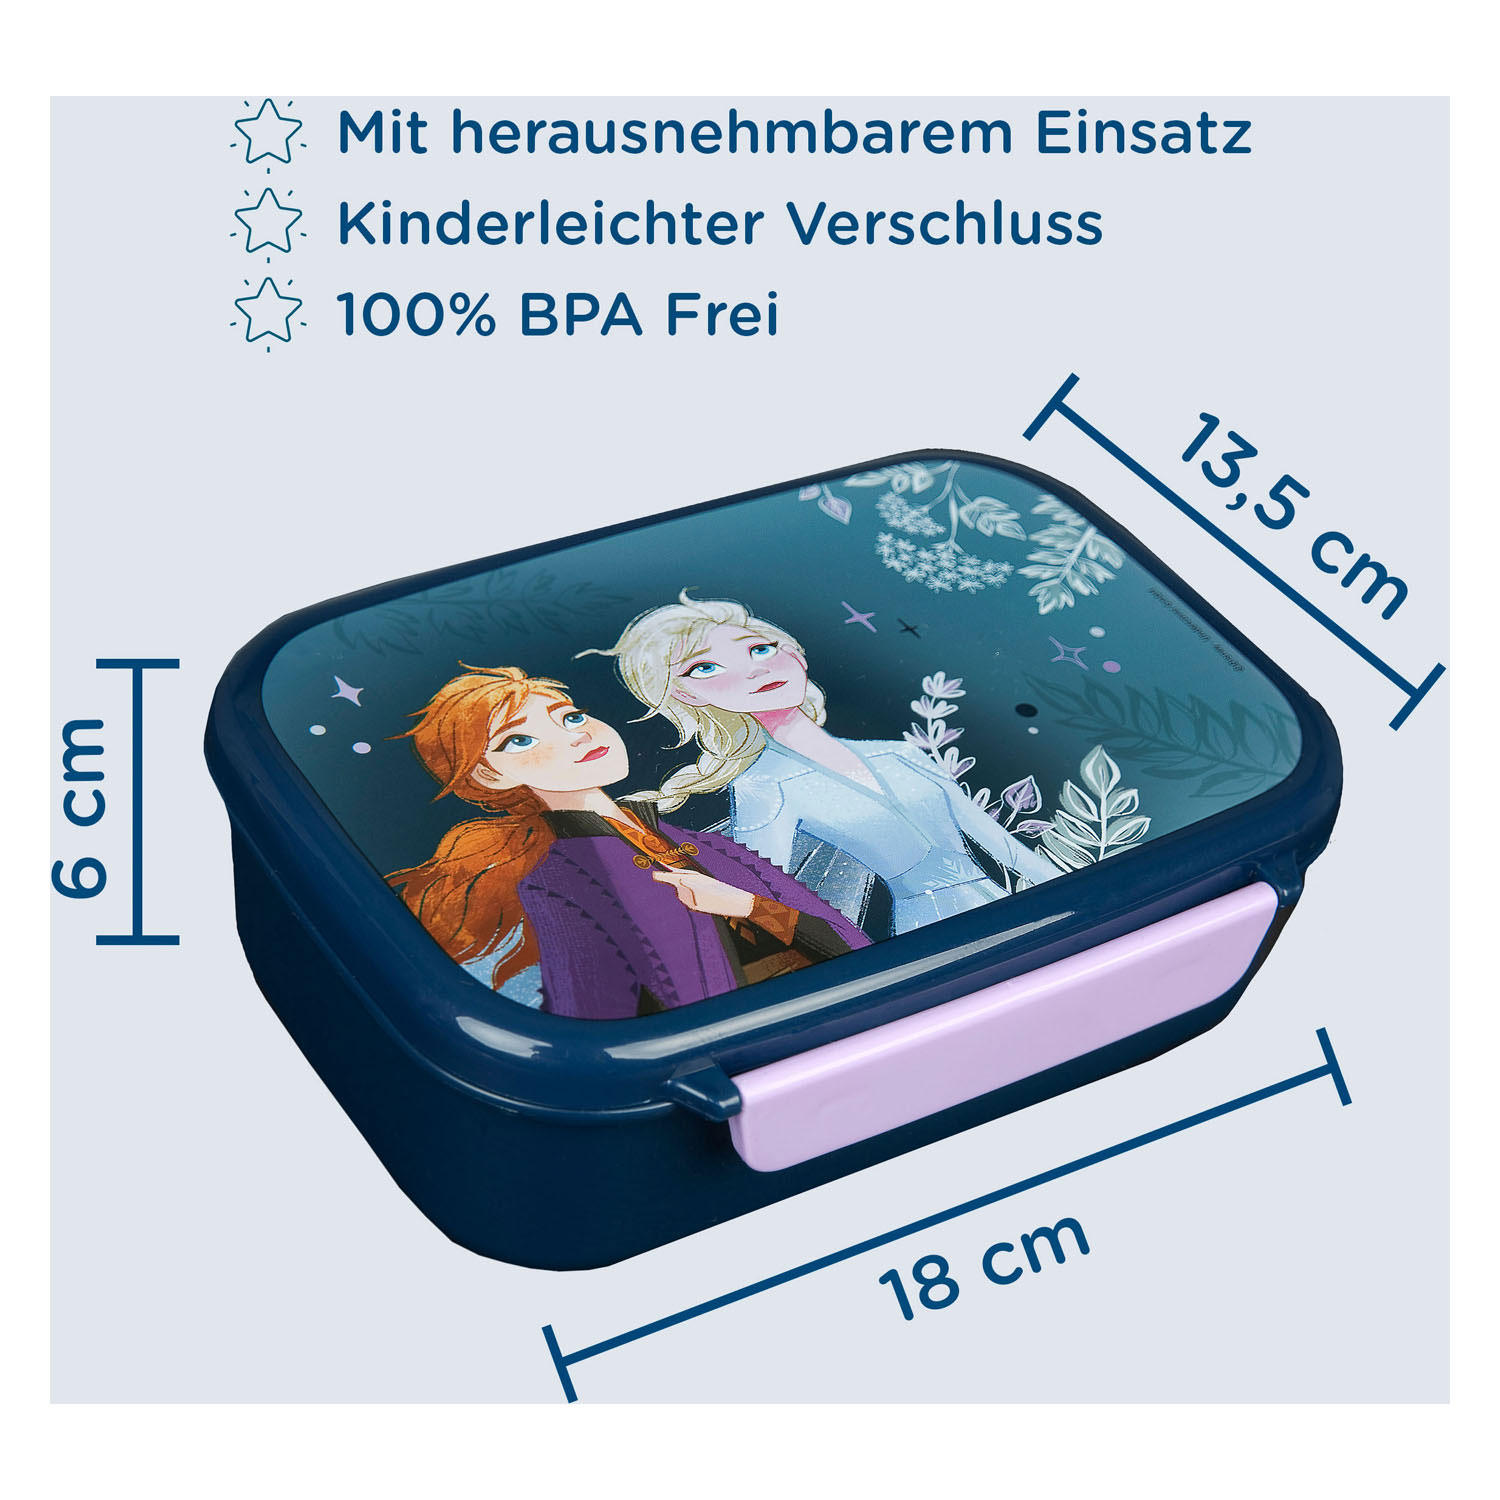 Lunchbox Disney Frozen